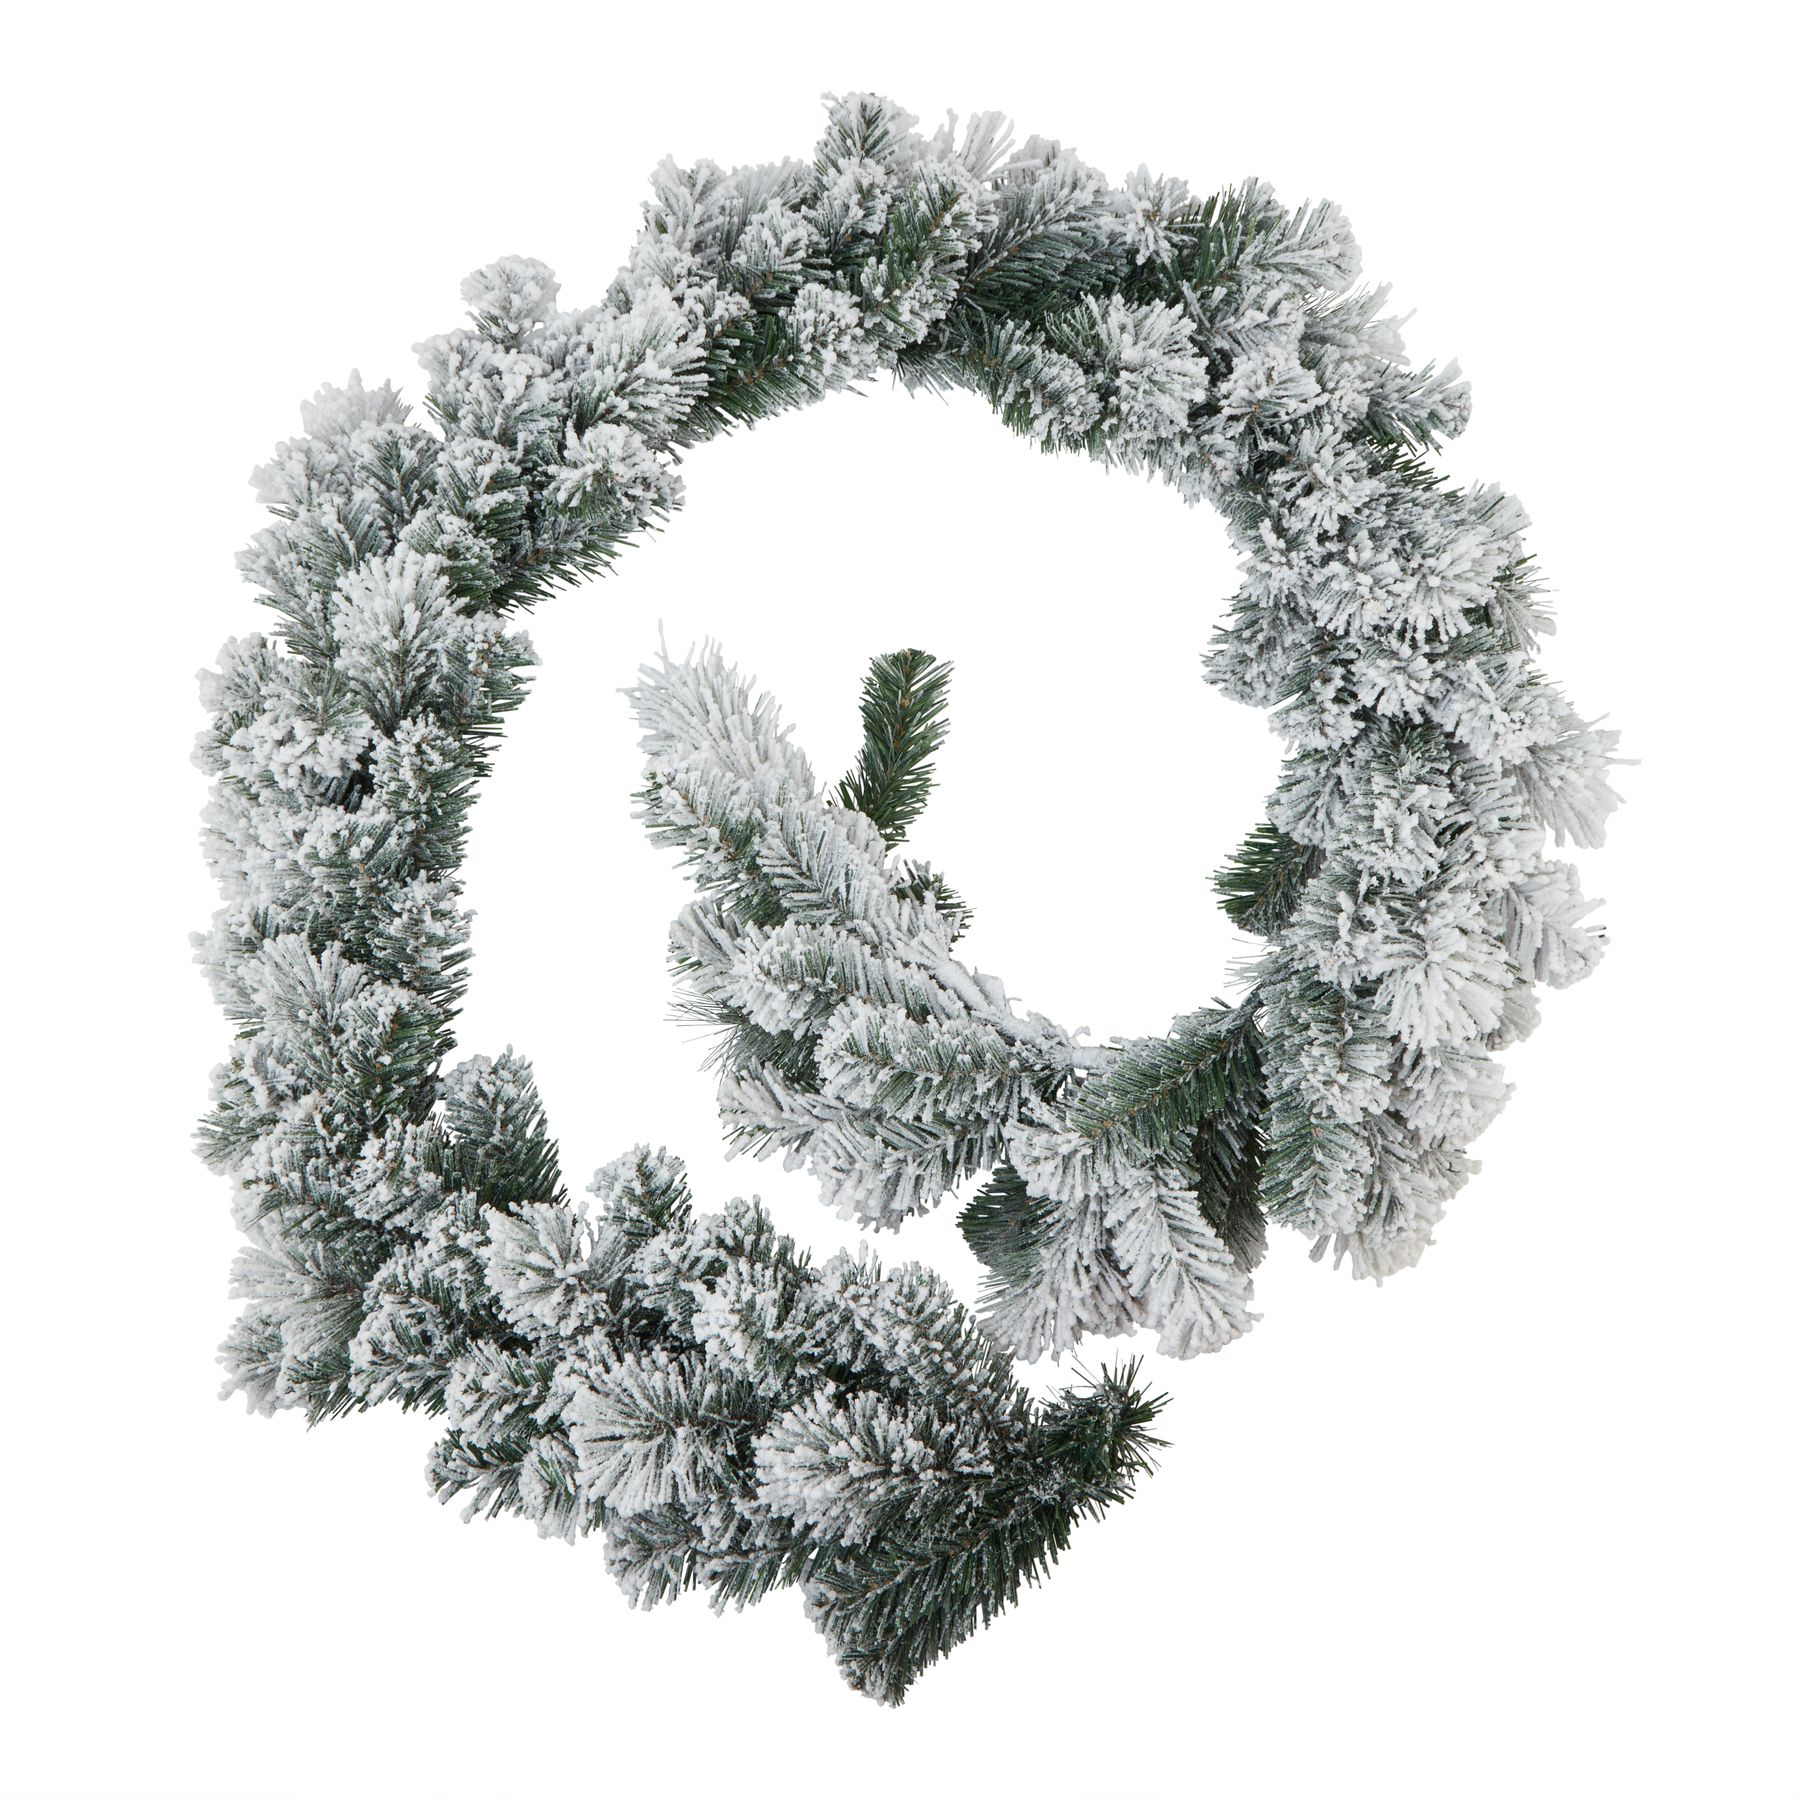 Snowy Pine Garland - Image 1